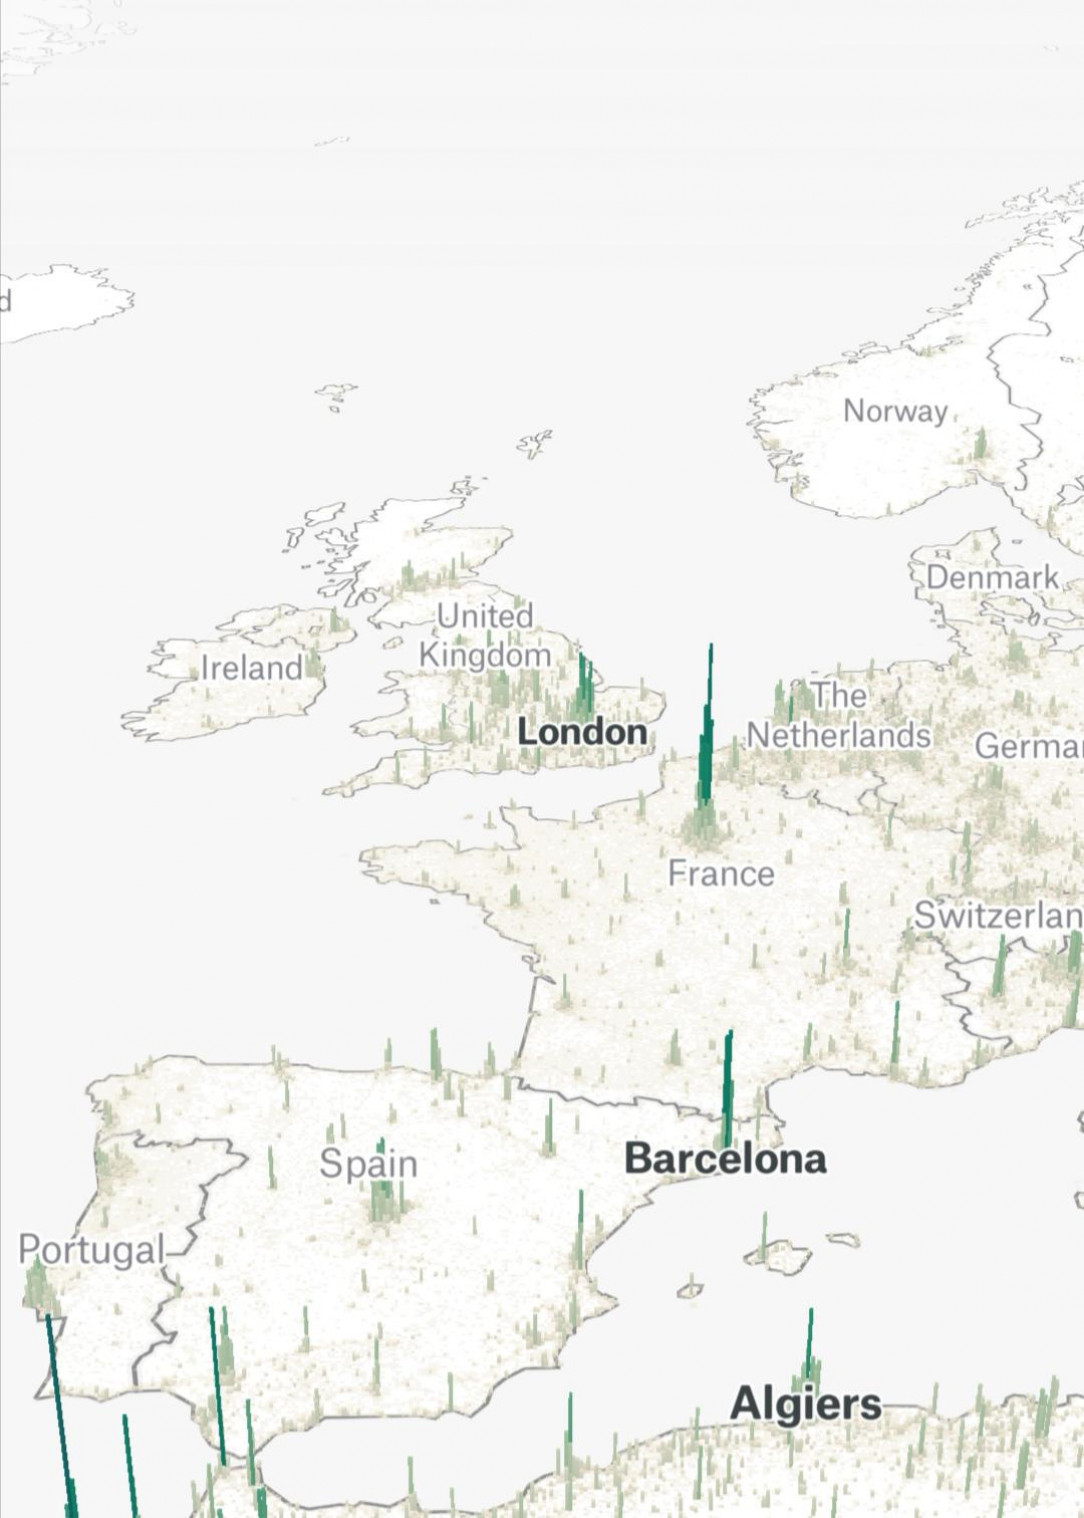 Population density of Western Europe